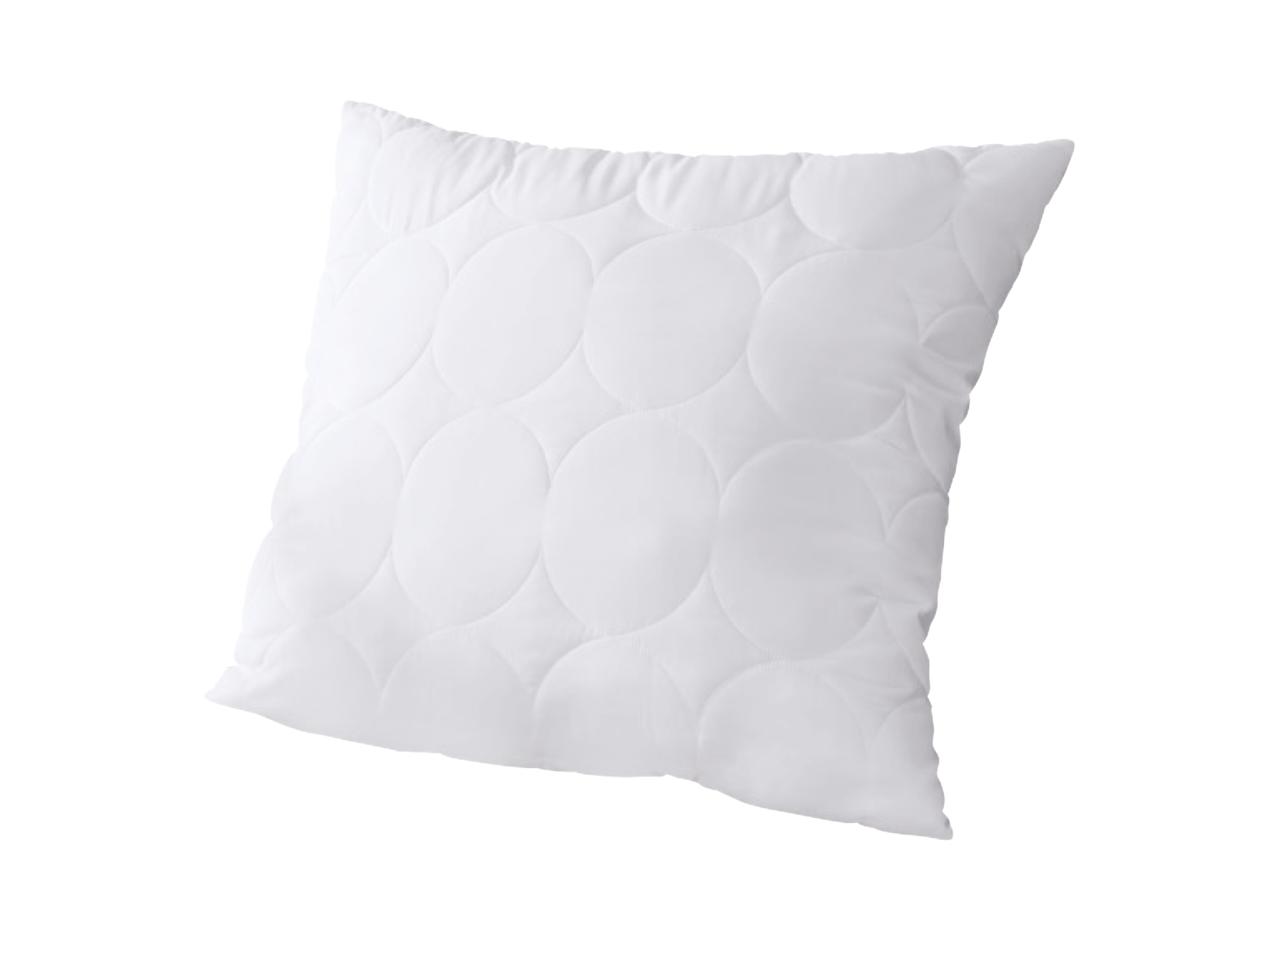 MERADISO Sanitized Pillow